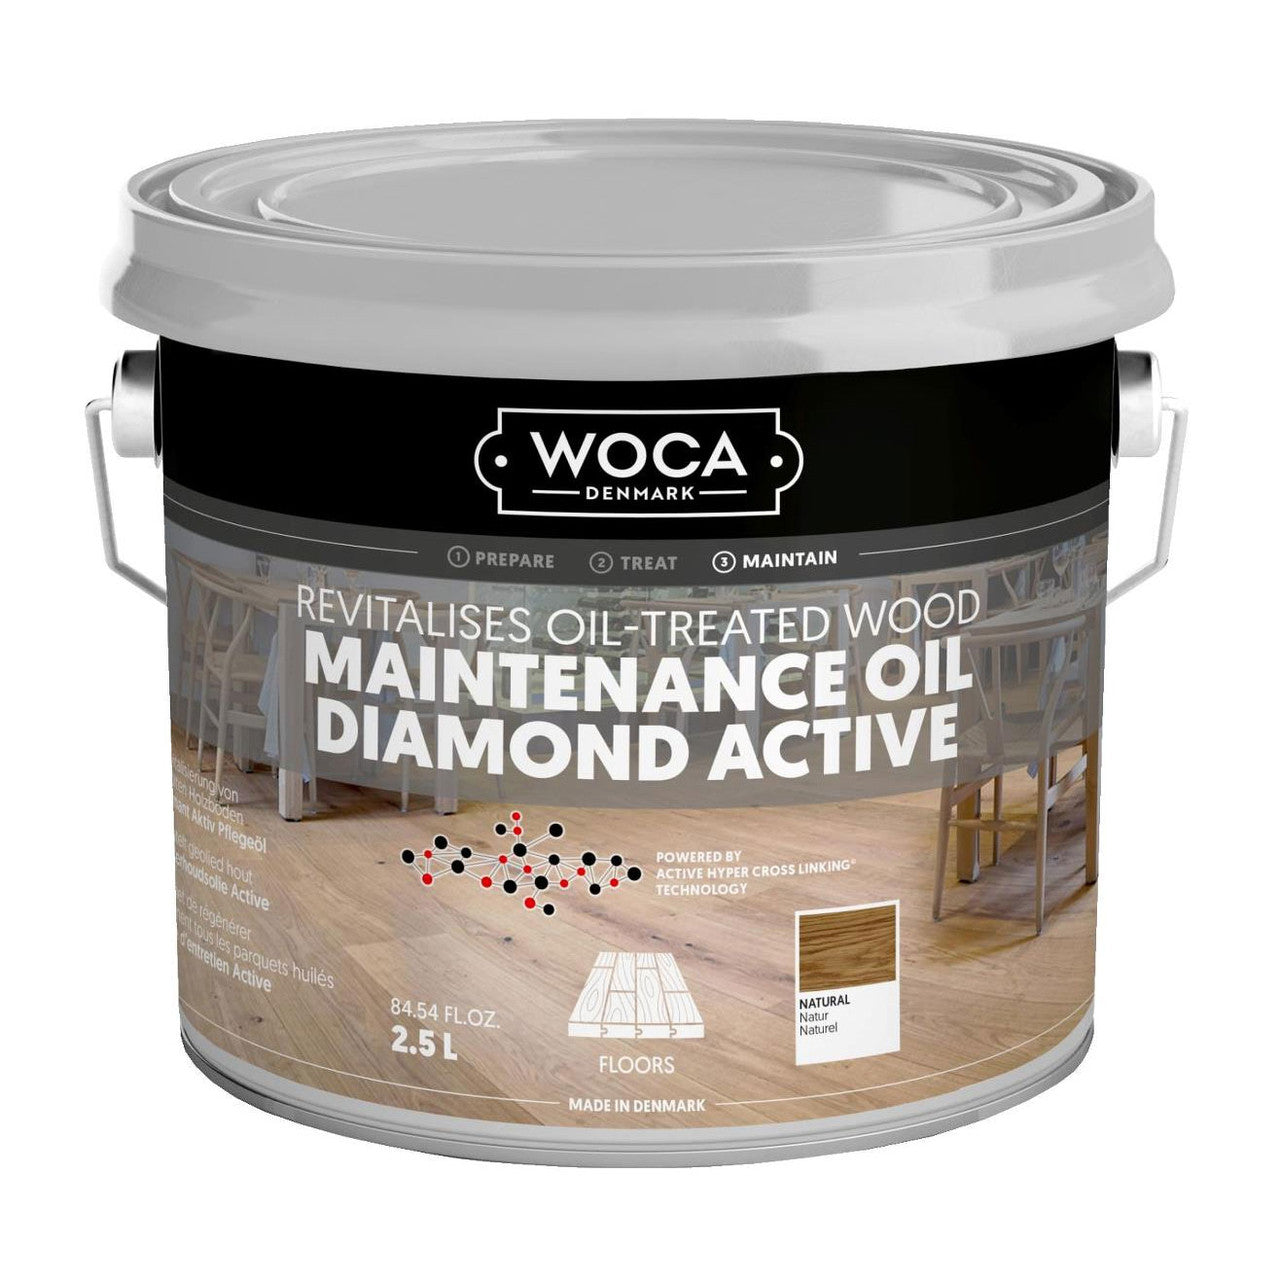 WOCA Maintenance Oil Diamond Active